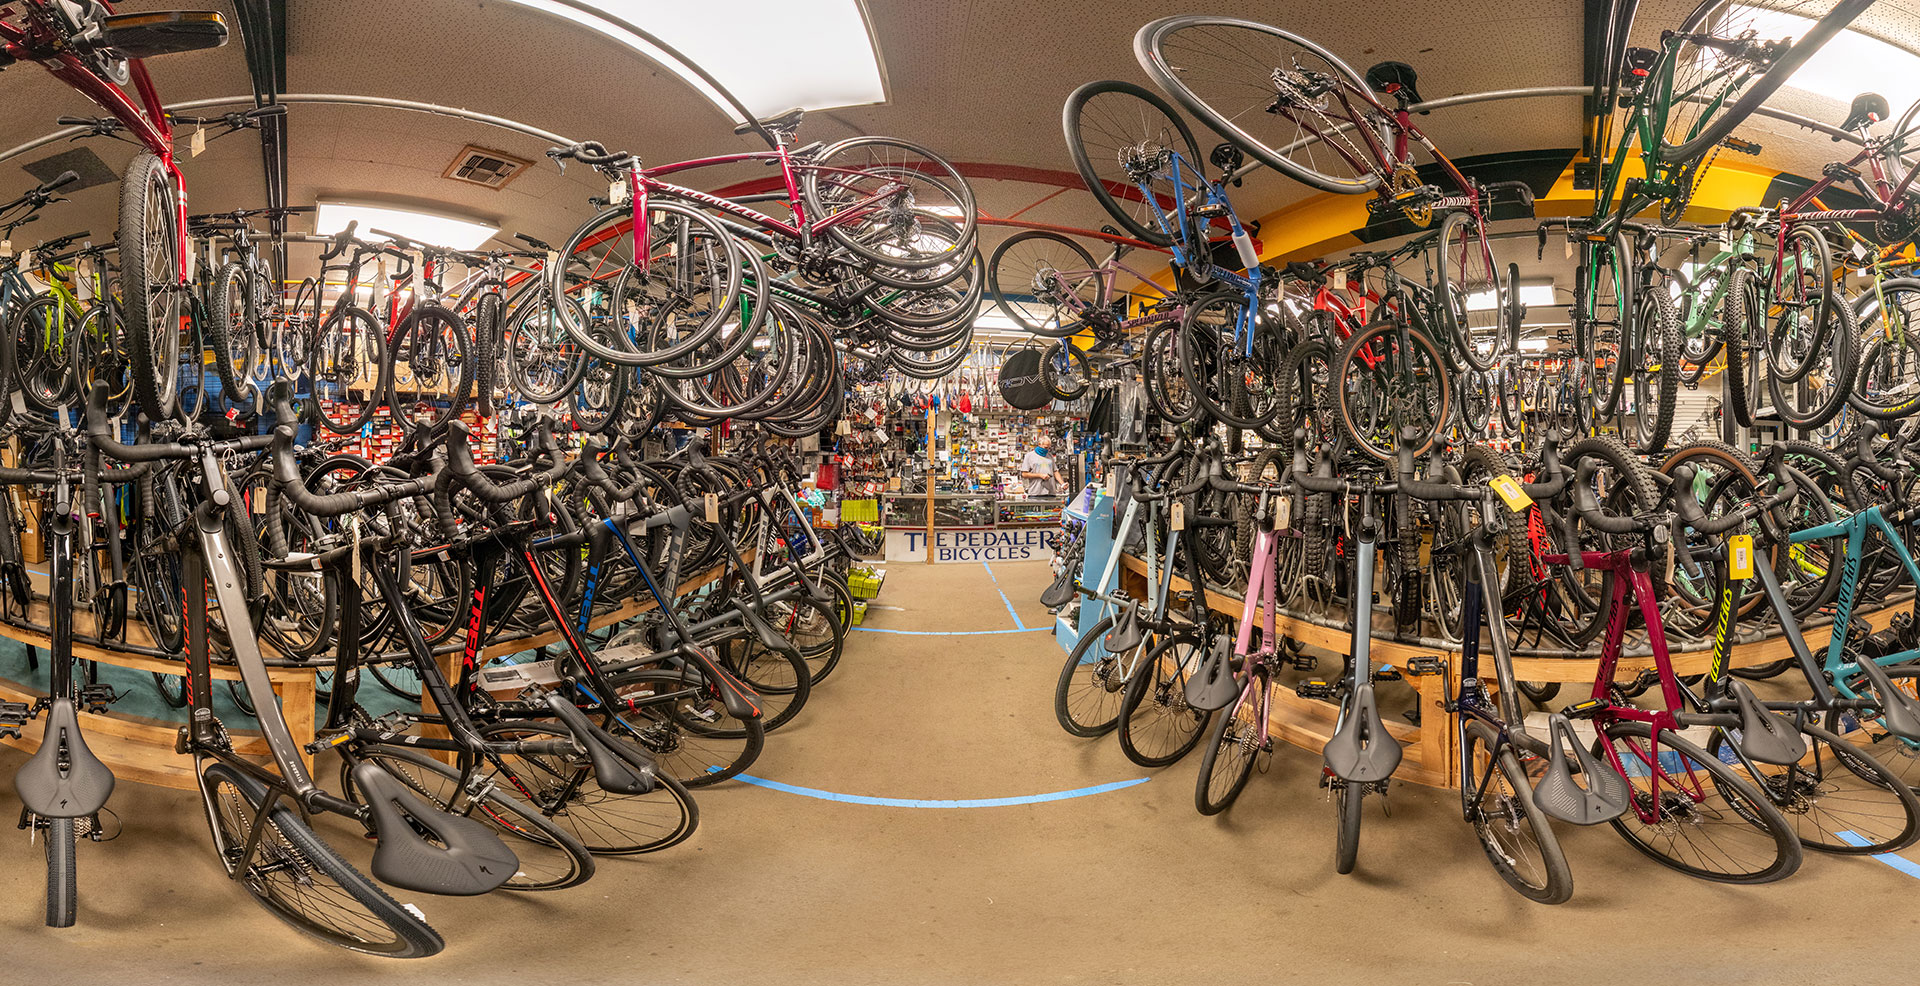 Pedaler Bike Shop by Dynamic VRT Beth Cloutier